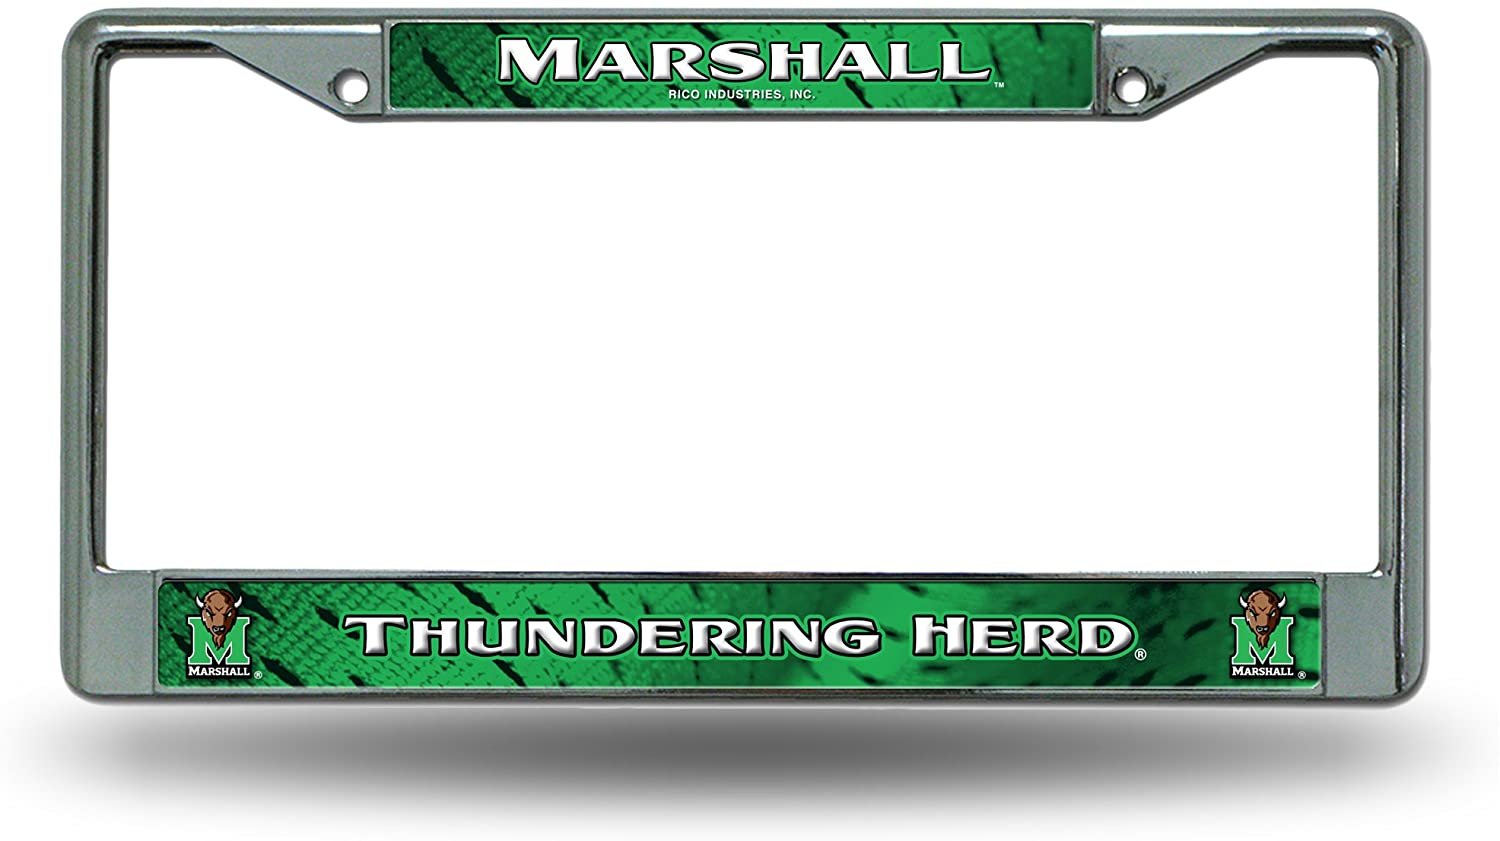 Marshall University Thundering Herd Premium Metal License Plate Frame Chrome Tag Cover, 12x6 Inch